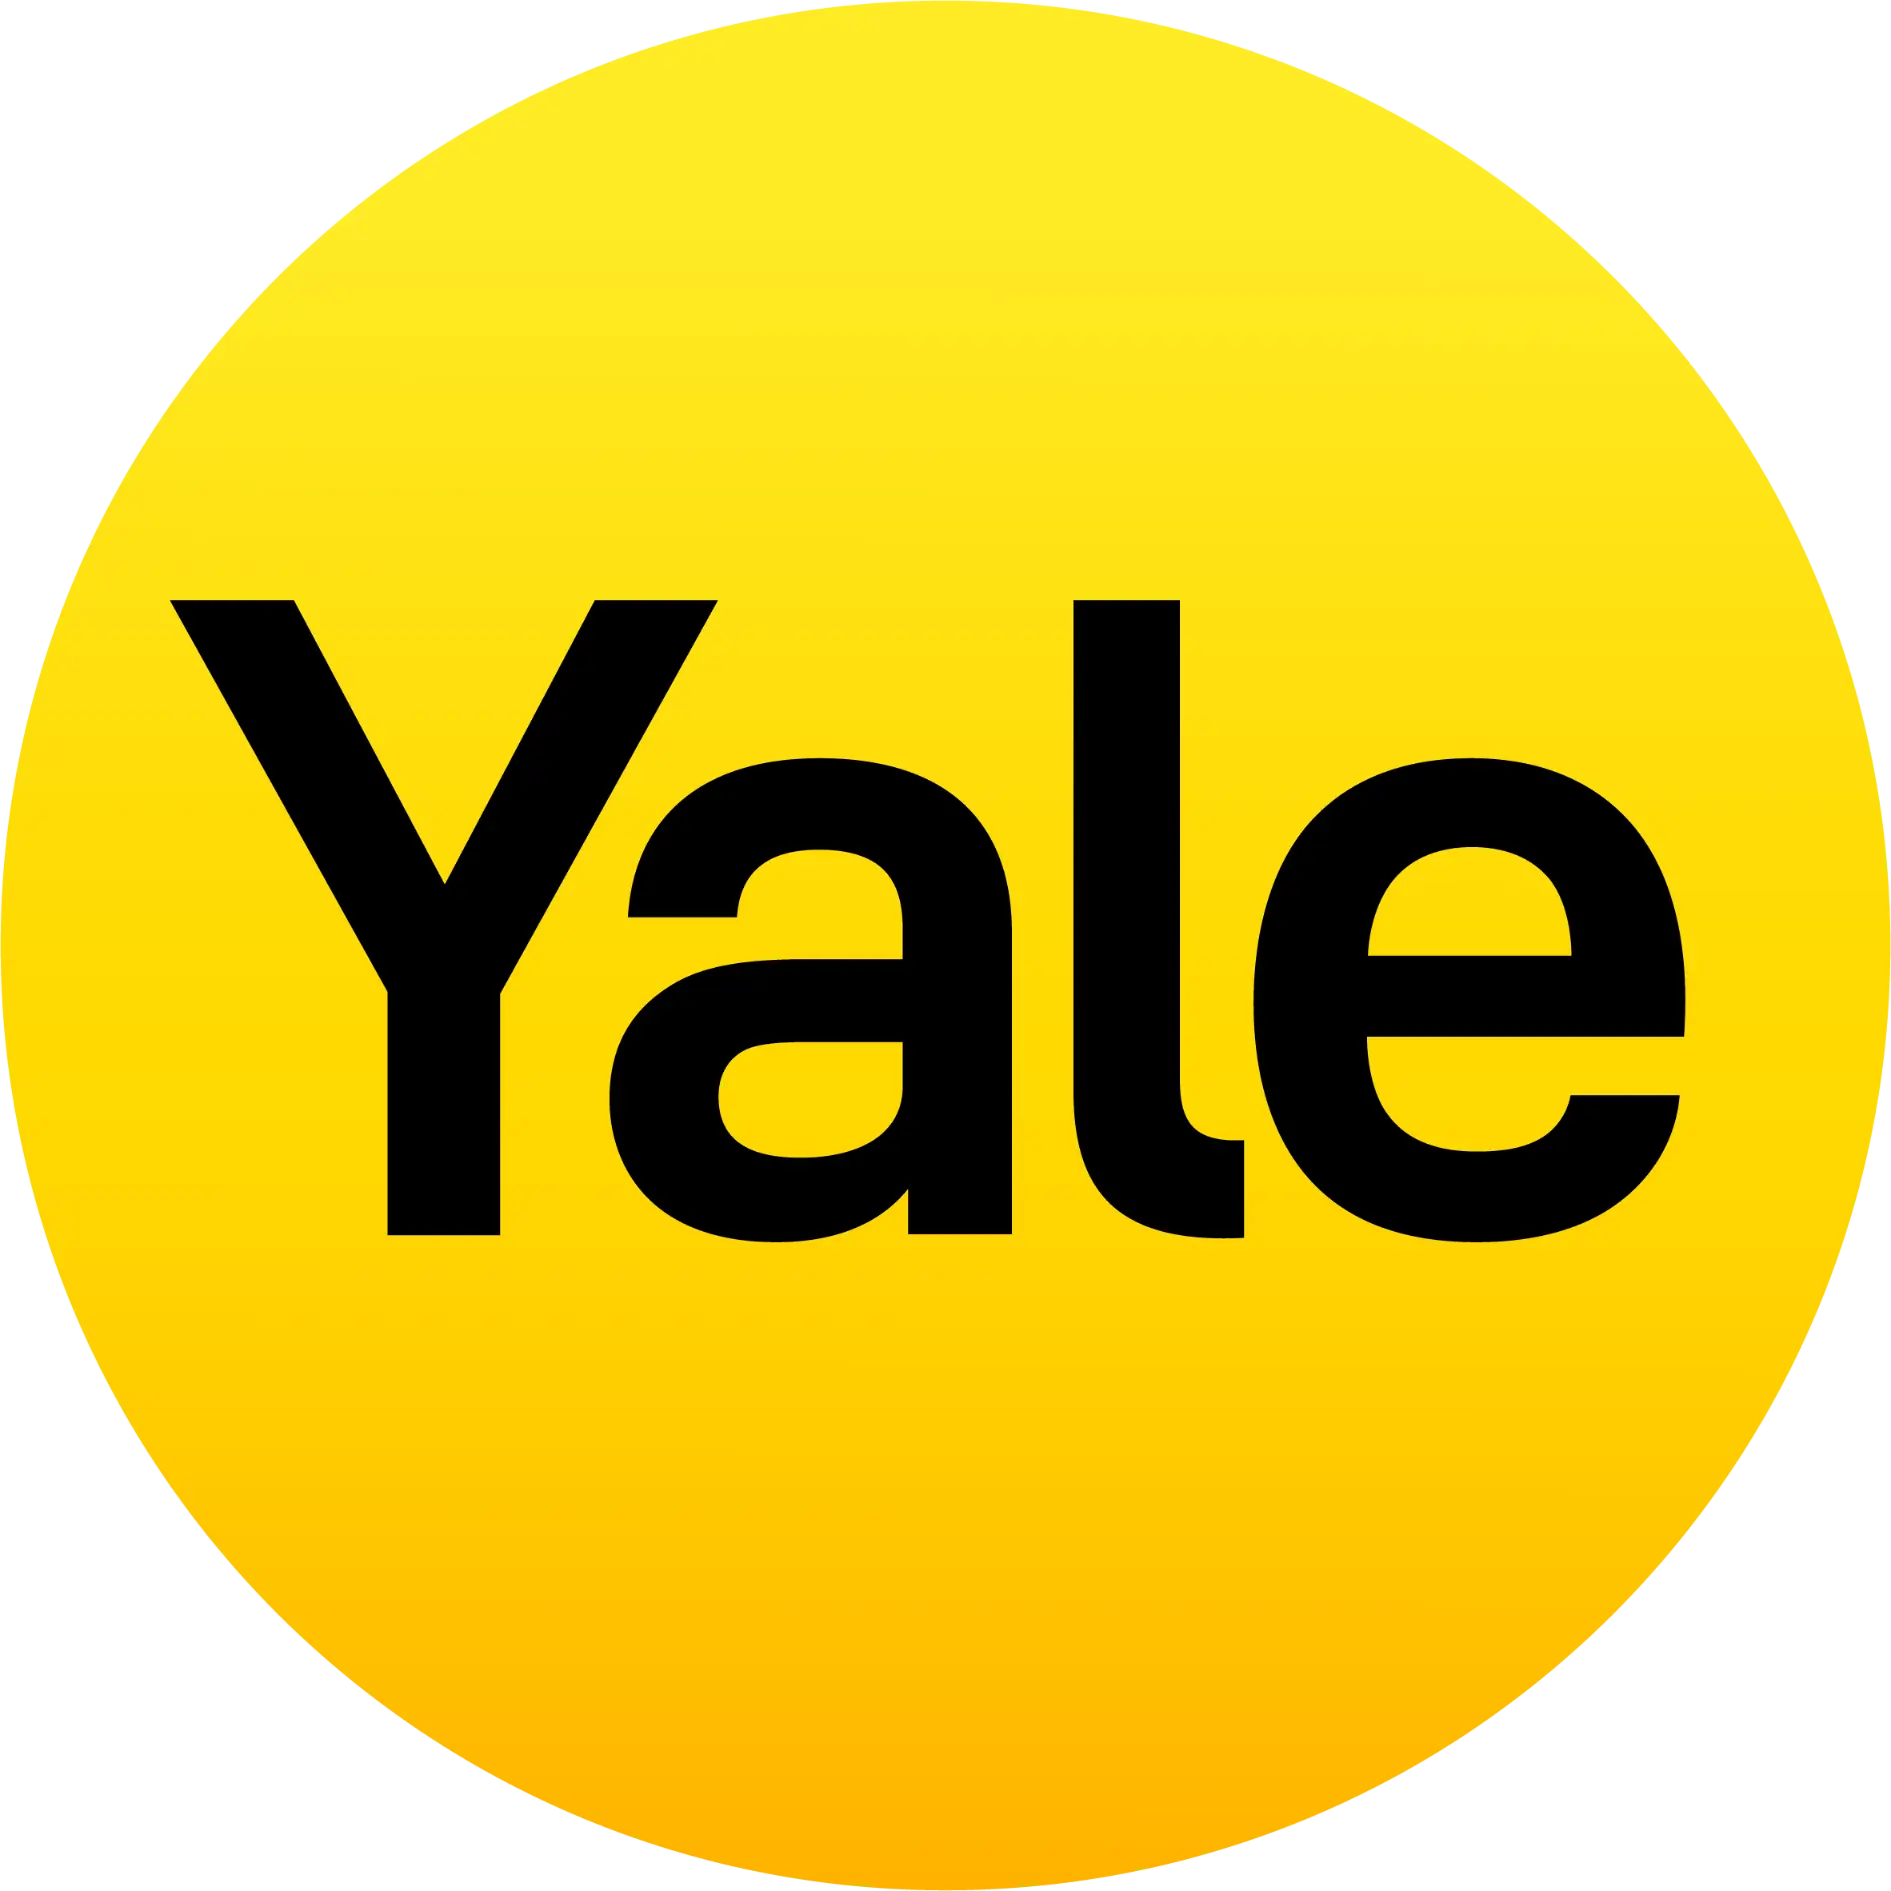 Yale_Logo_Primary_RGB